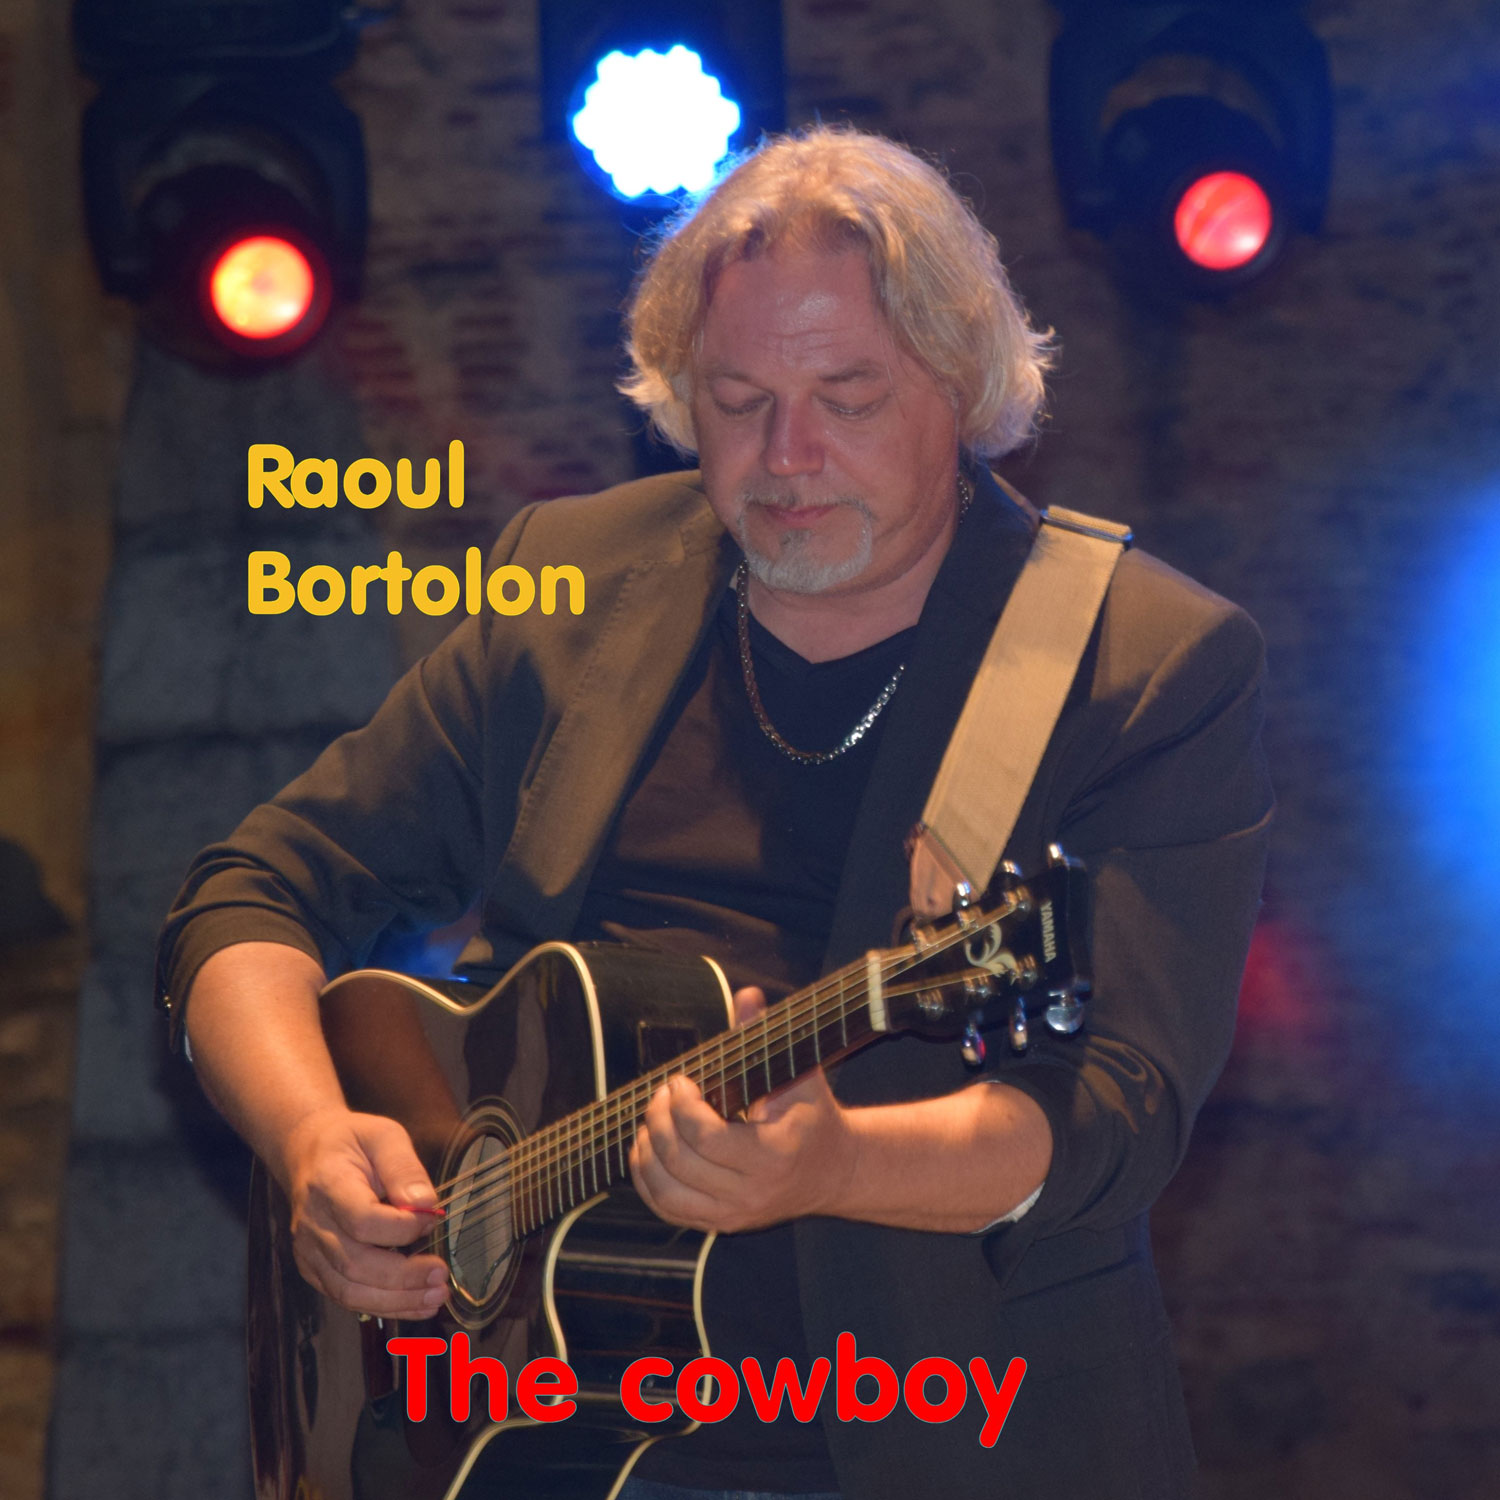 The cowboy